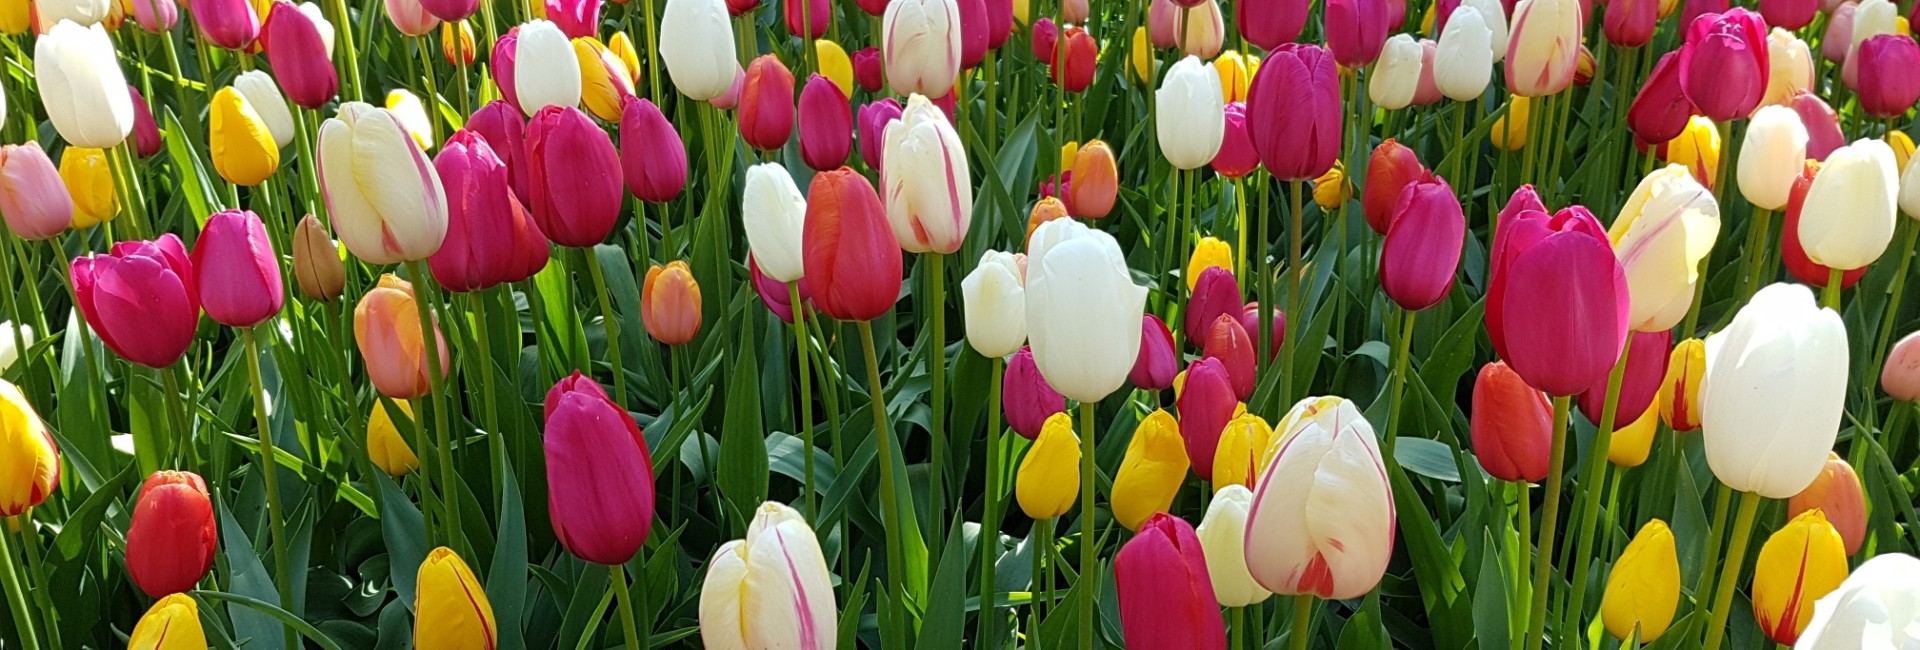 Mixed-Tulips-planted-at-Keukenhof-park